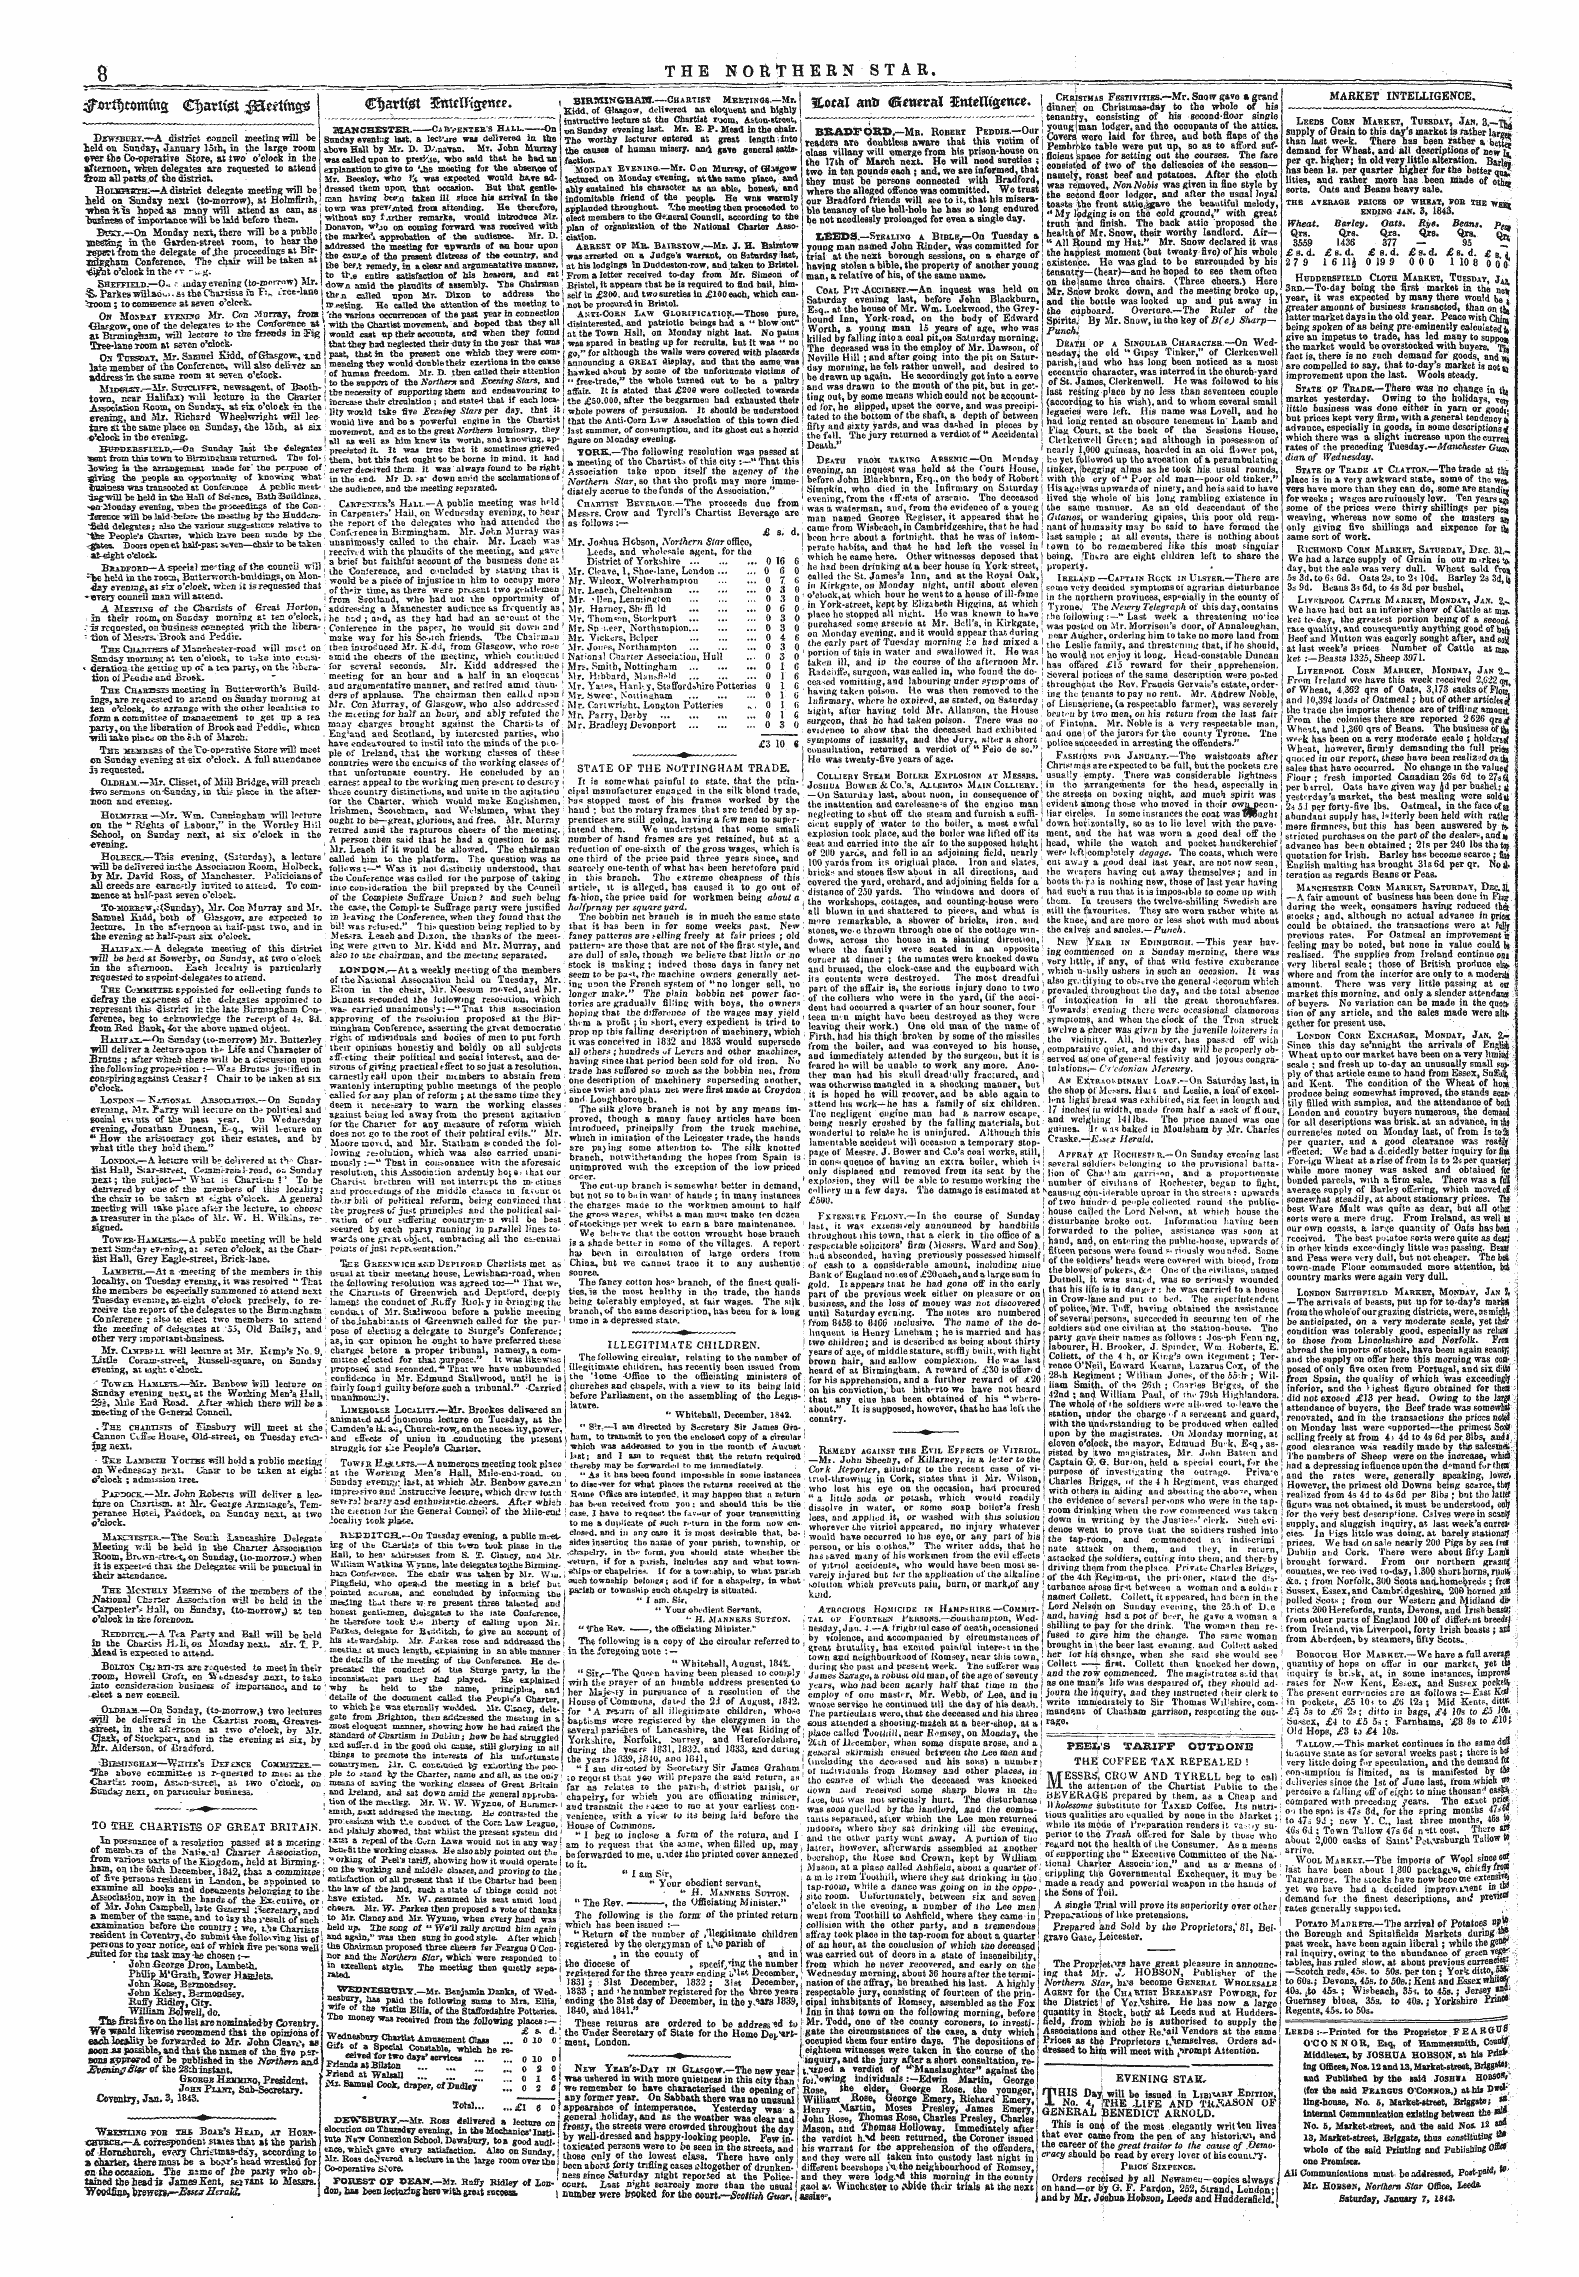 Northern Star (1837-1852): jS F Y, 4th edition - Market Intelligence